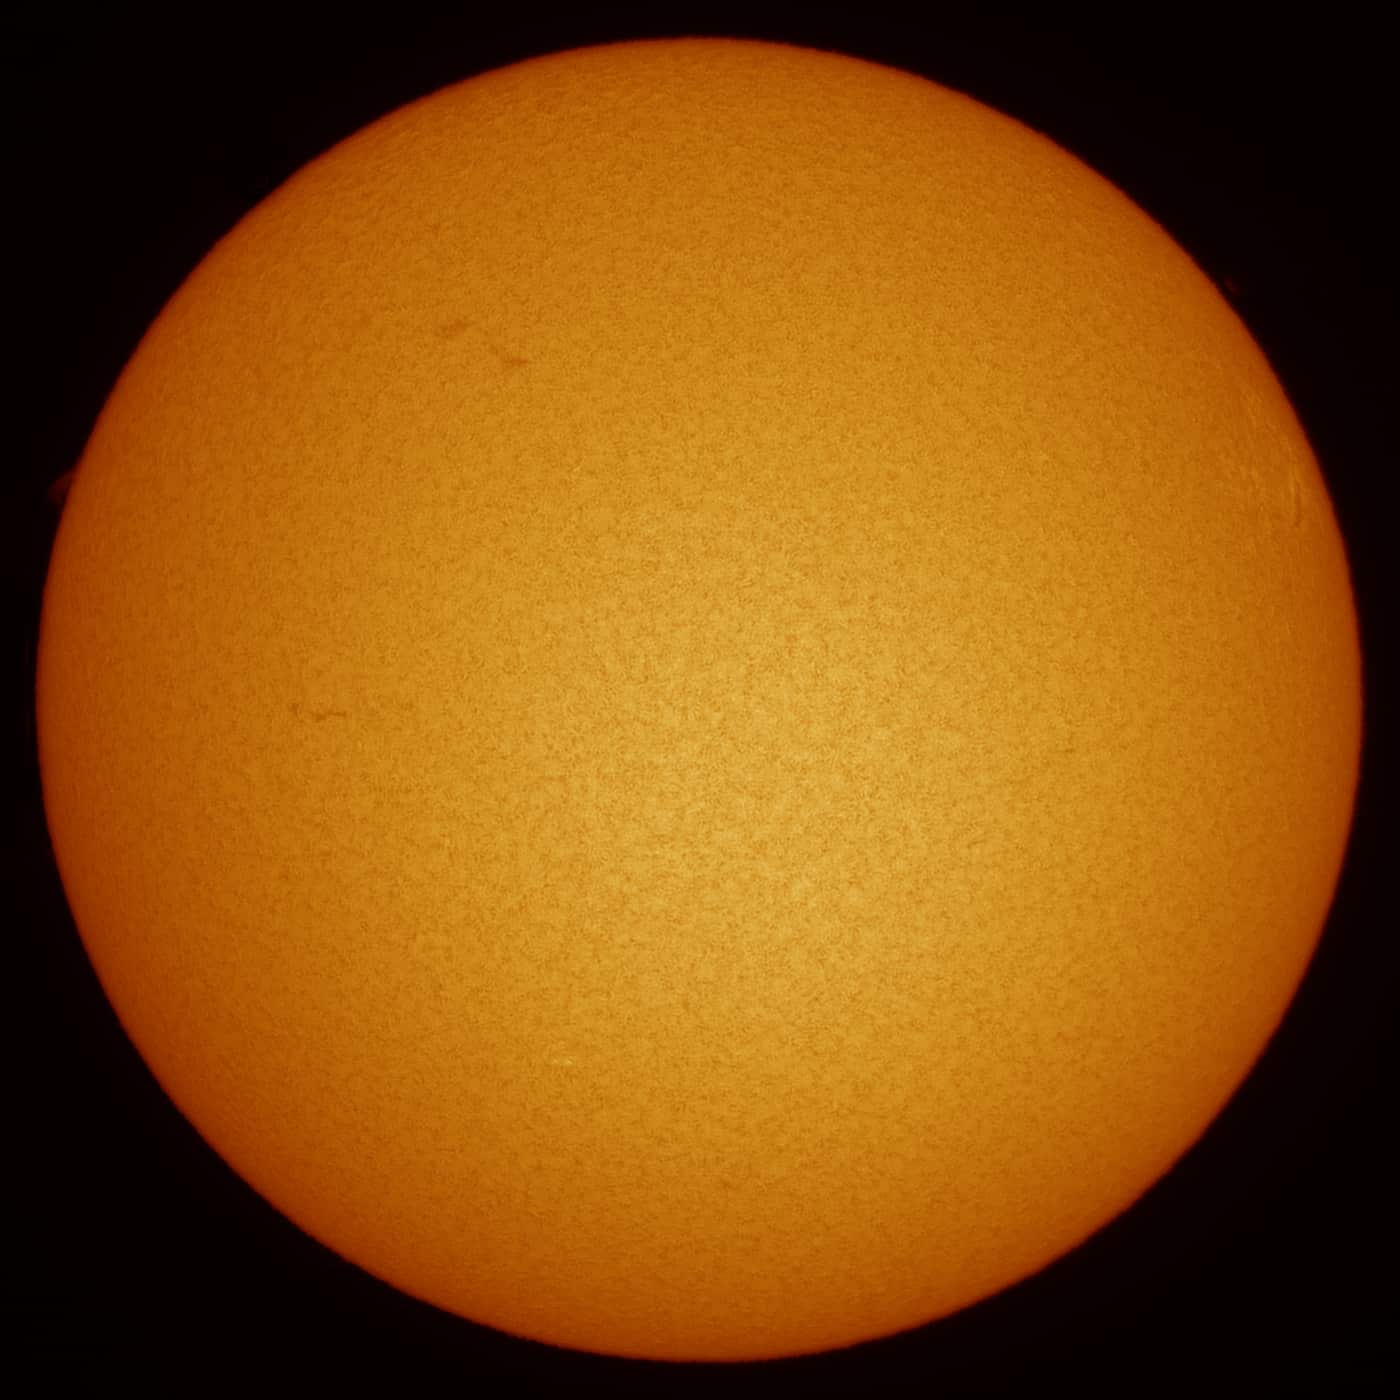 Sonnenbeobachtung im H-Alpha-Licht